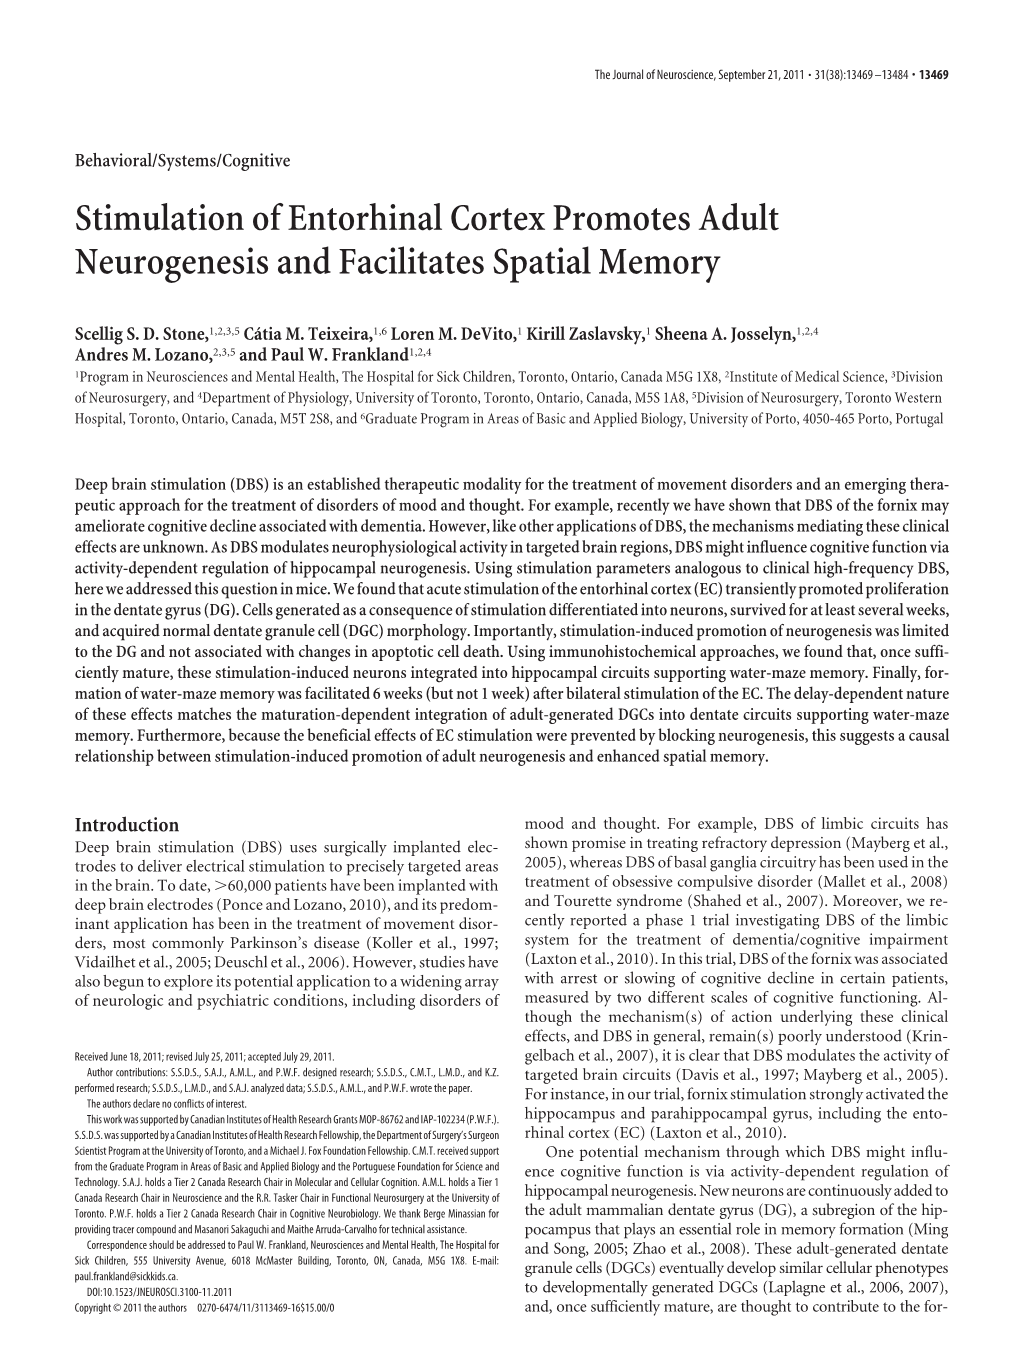 Stimulation of Entorhinal Cortex Promotes Adult Neurogenesis and Facilitates Spatial Memory